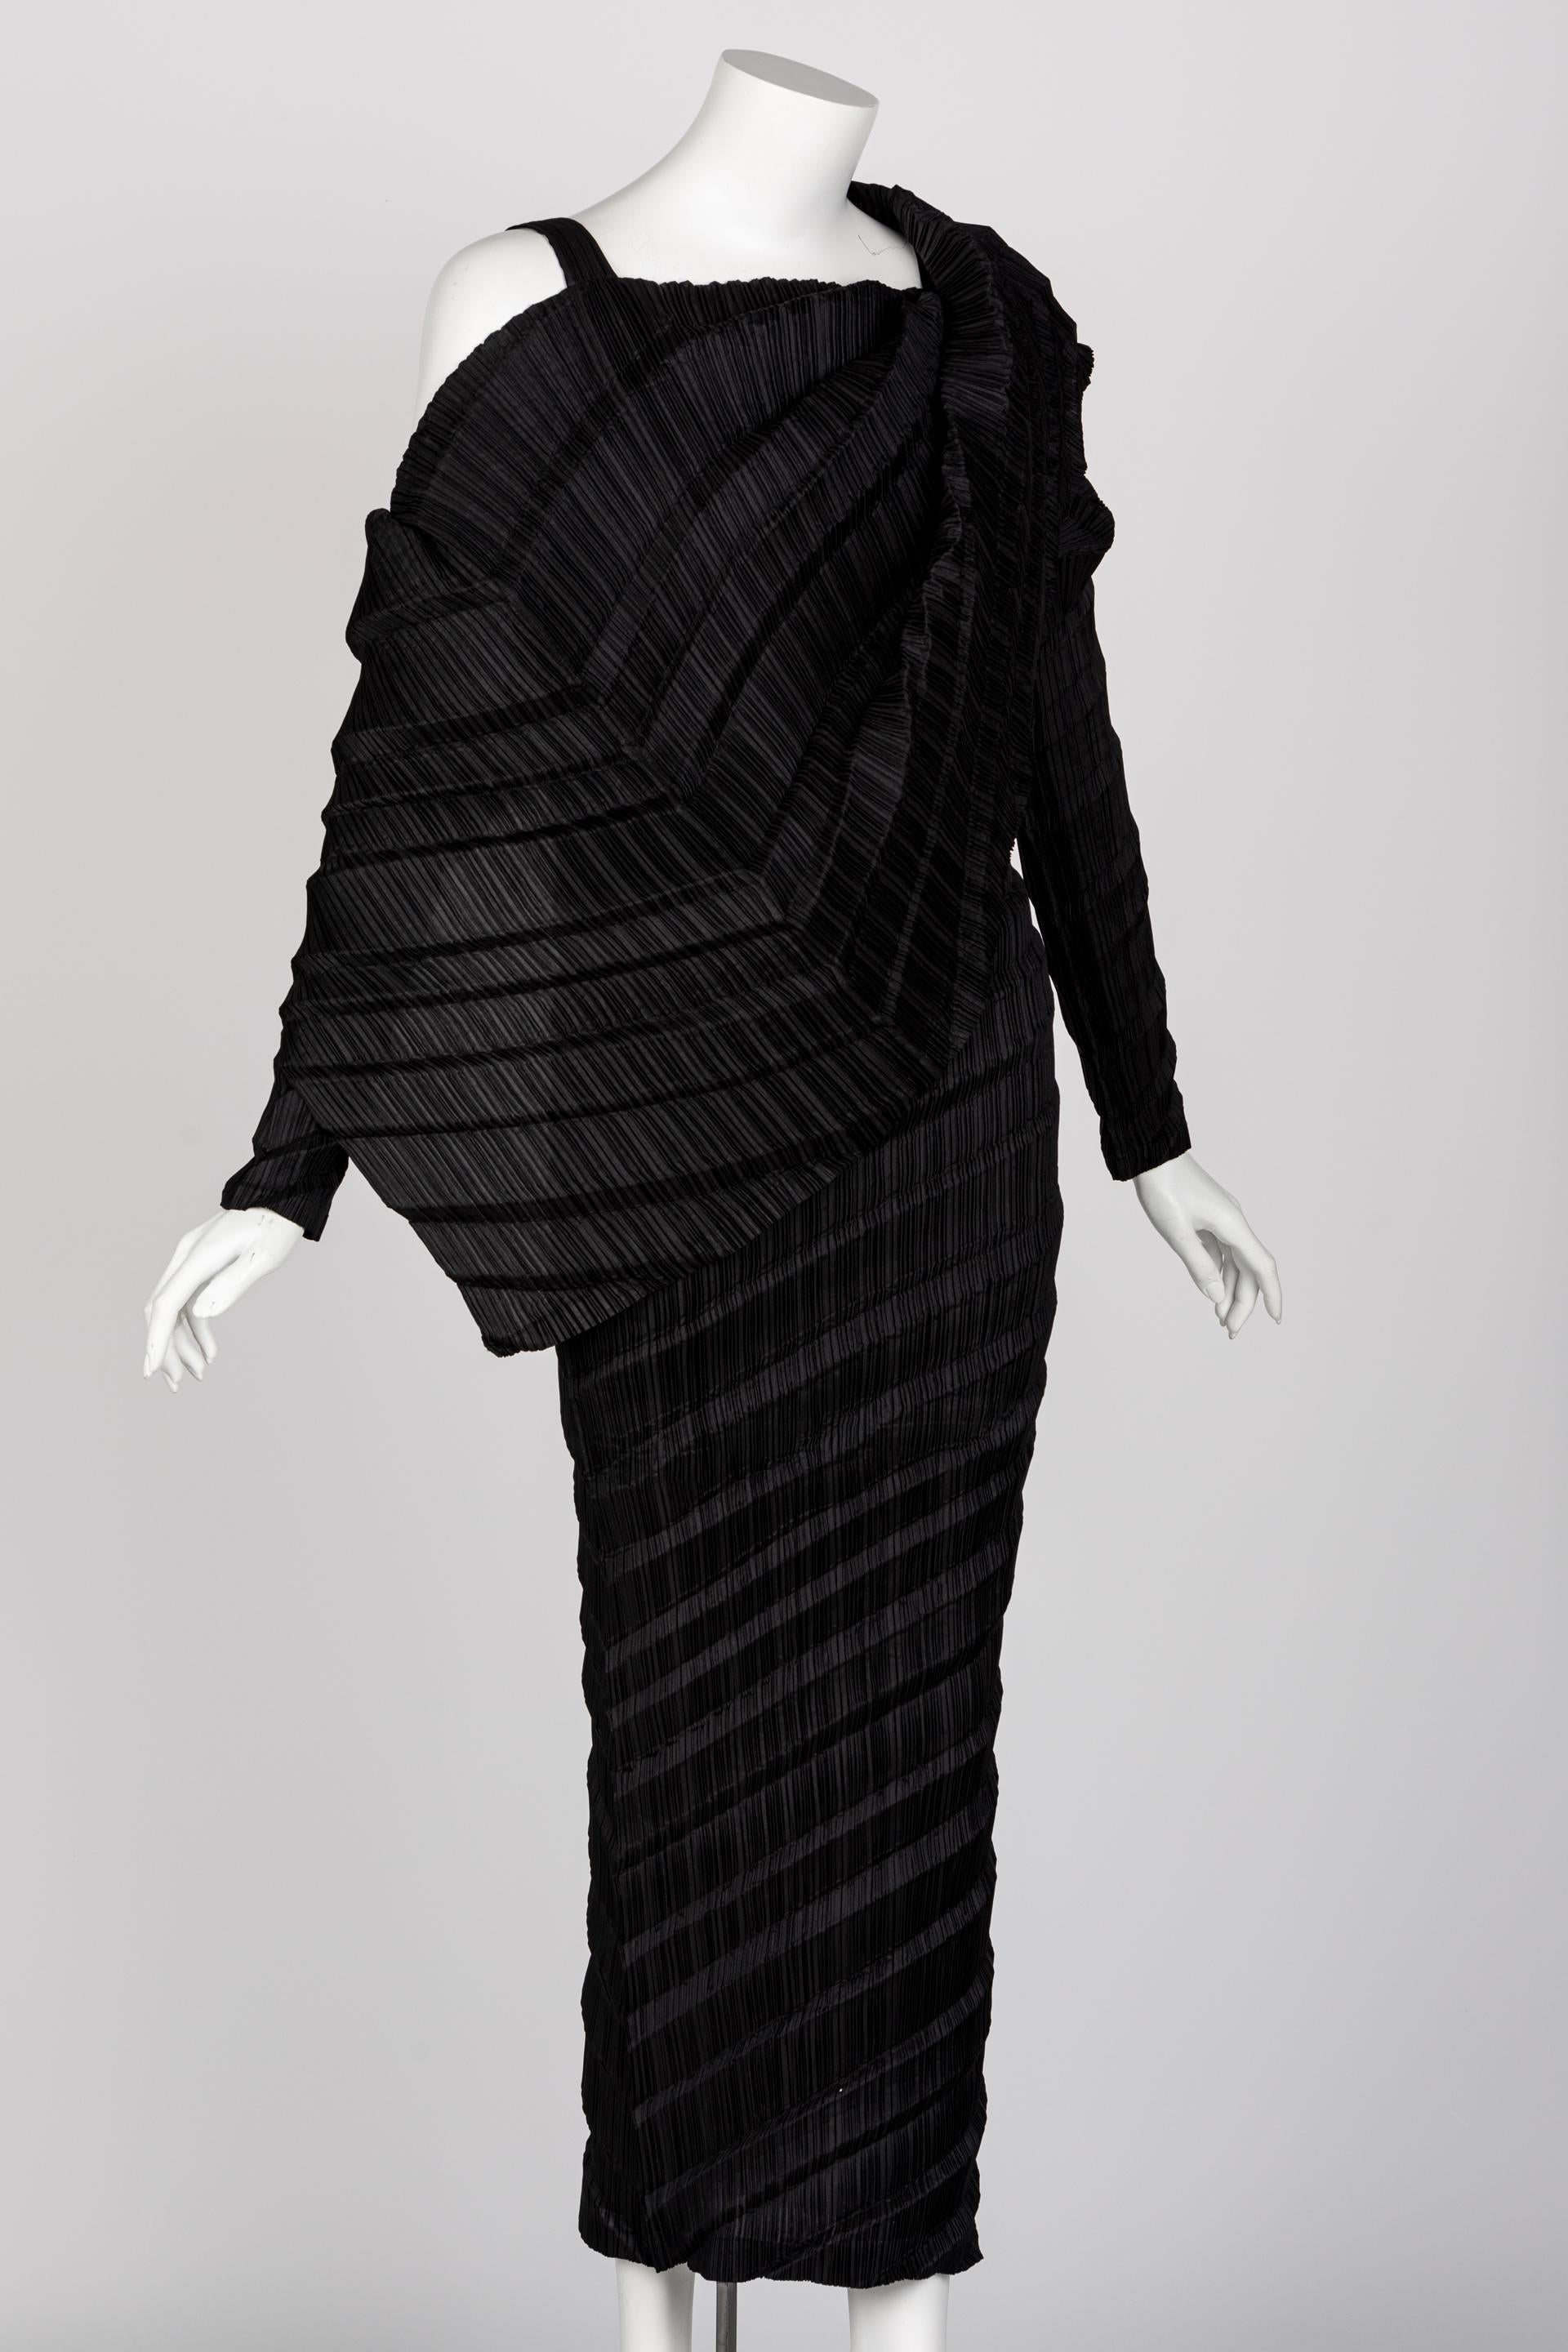 Issey Miyake Black Pleated Sculptural Dress, 1990s 5